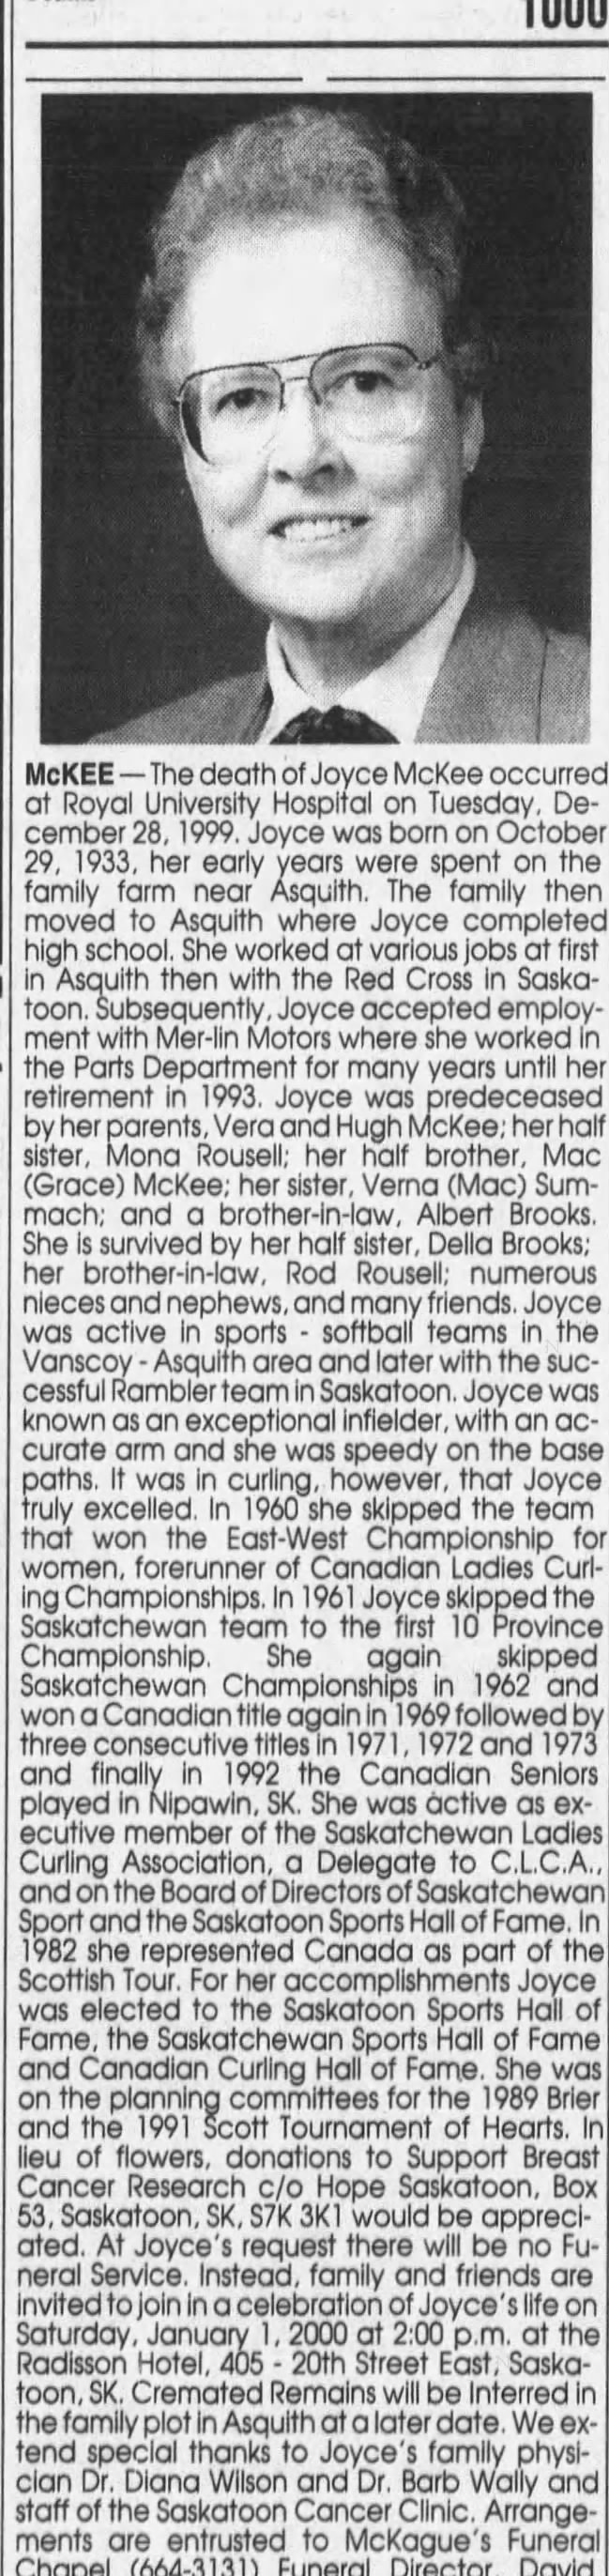 Obituary: Joyce McKEE, 1933-1999